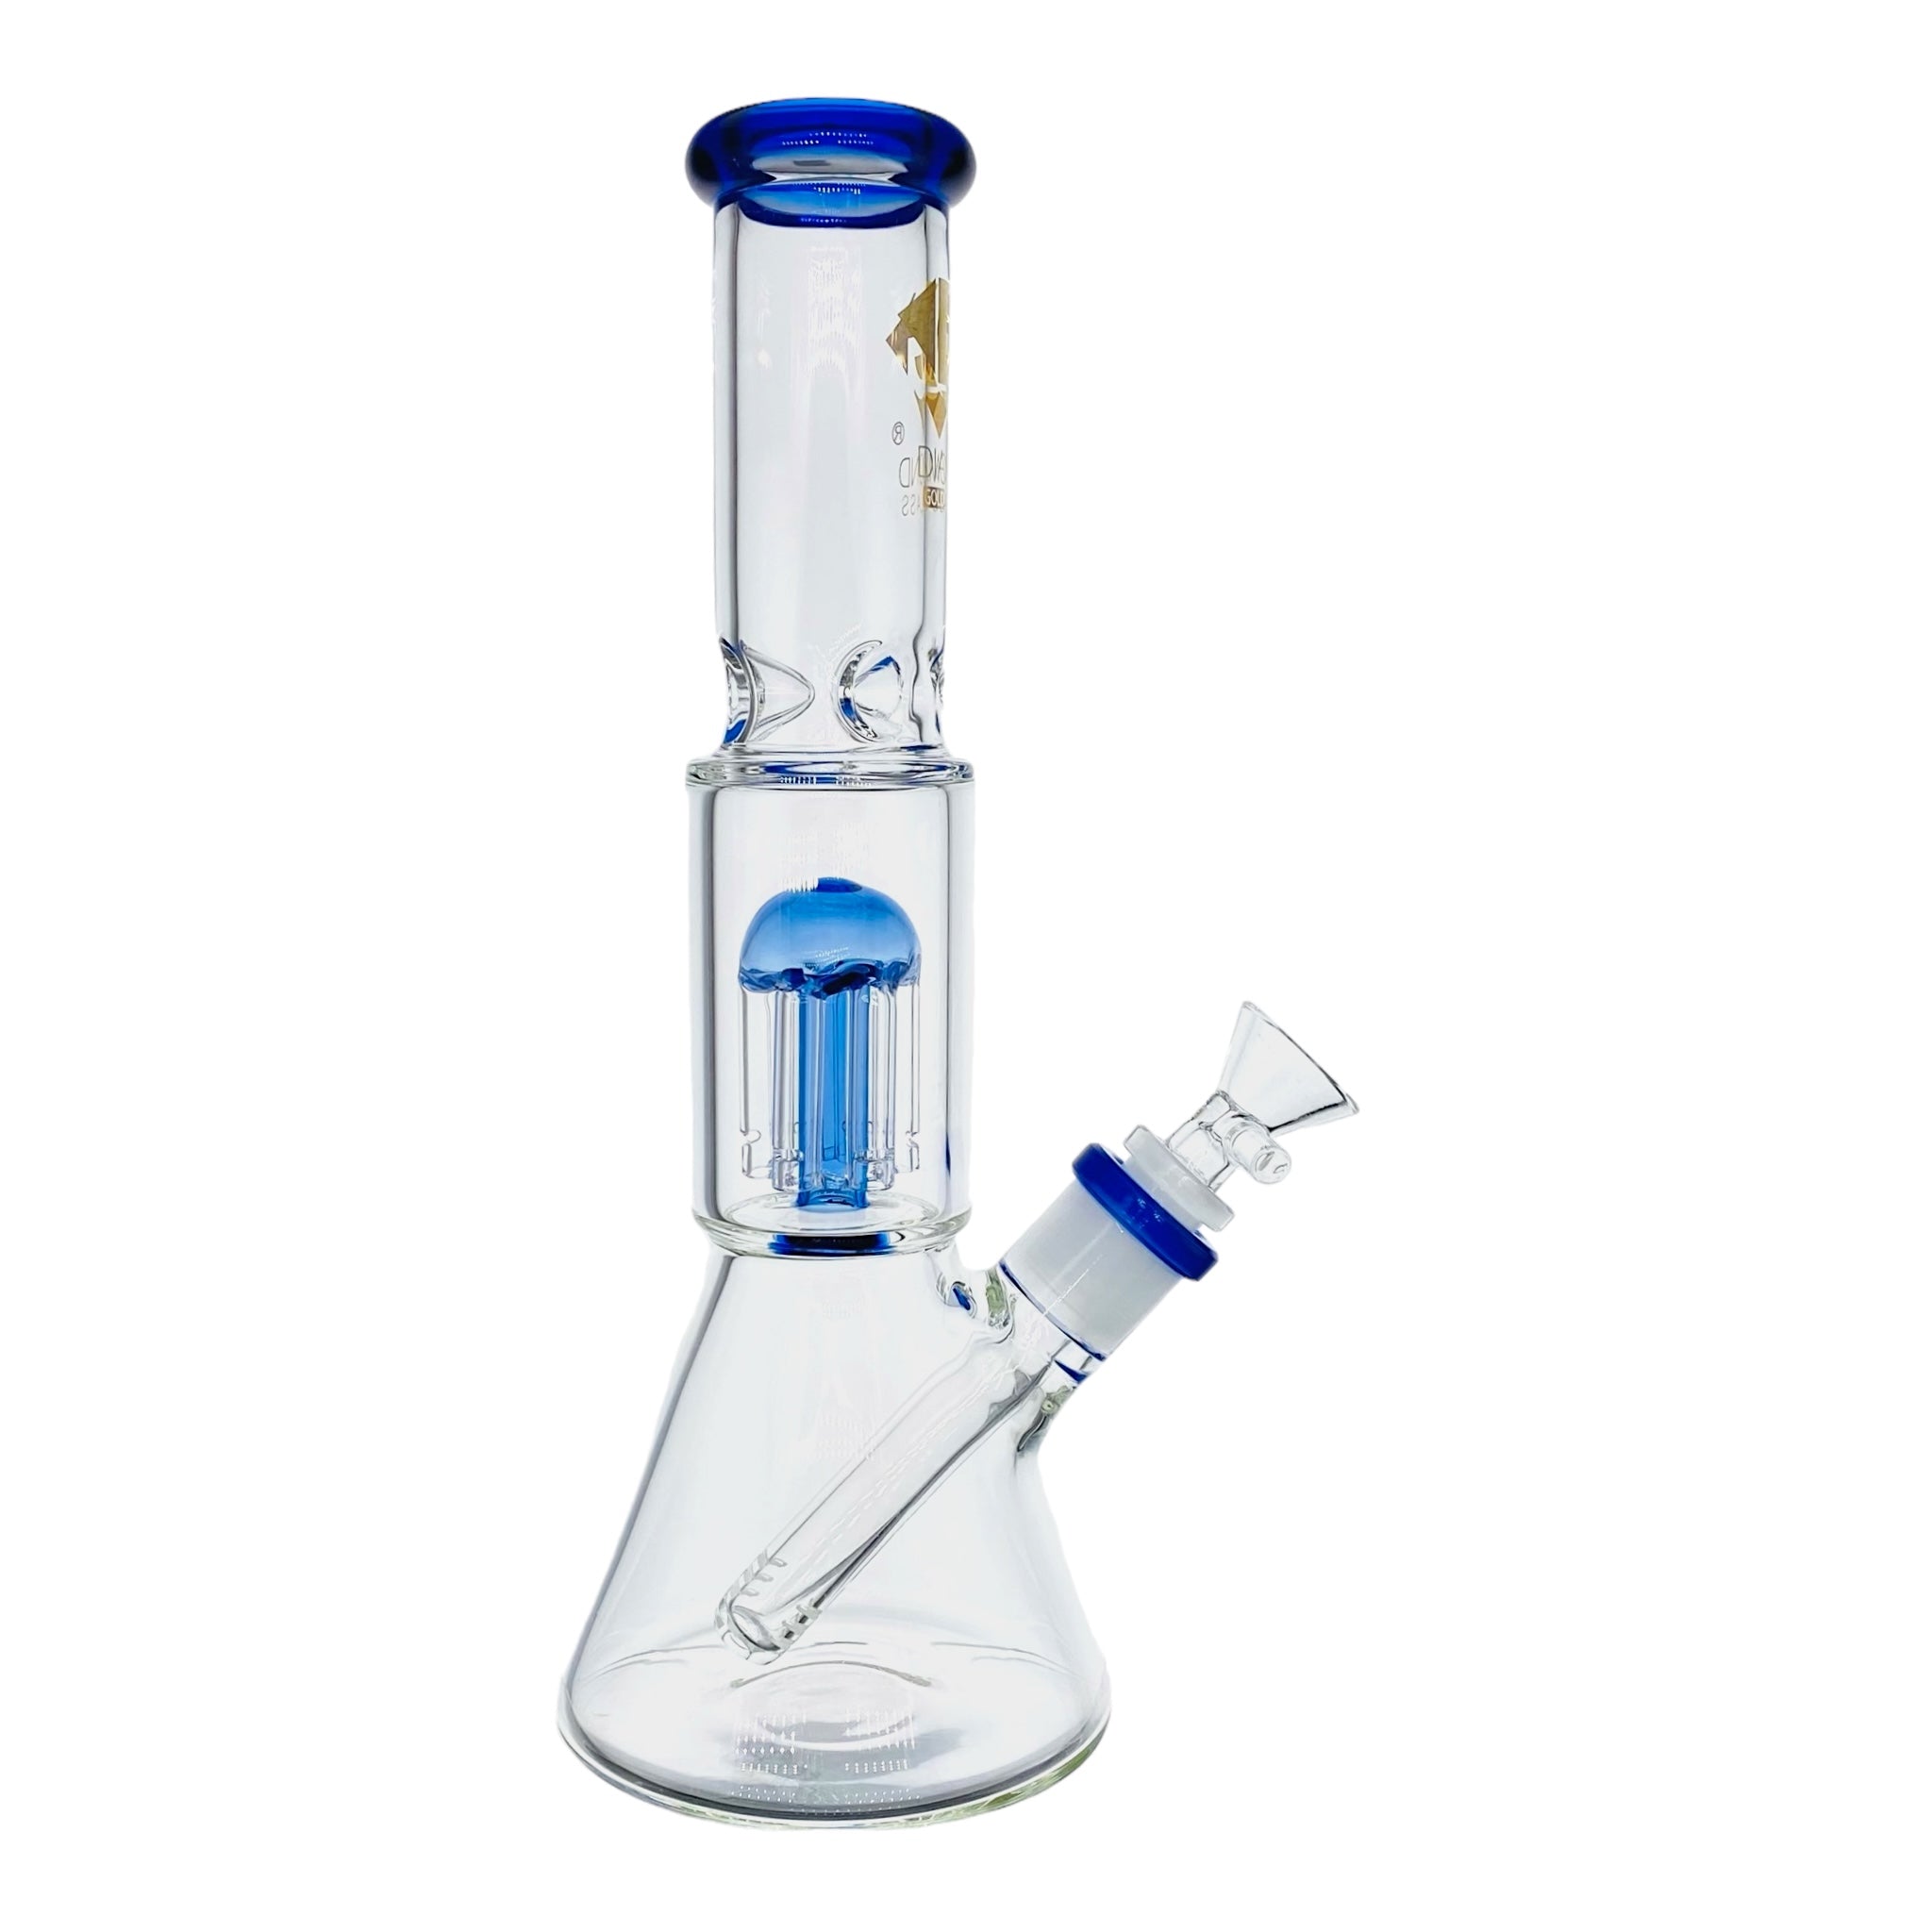 Diamond Glass Bong - Blue 11 Inch Beaker Bong With Tree Perc for sale